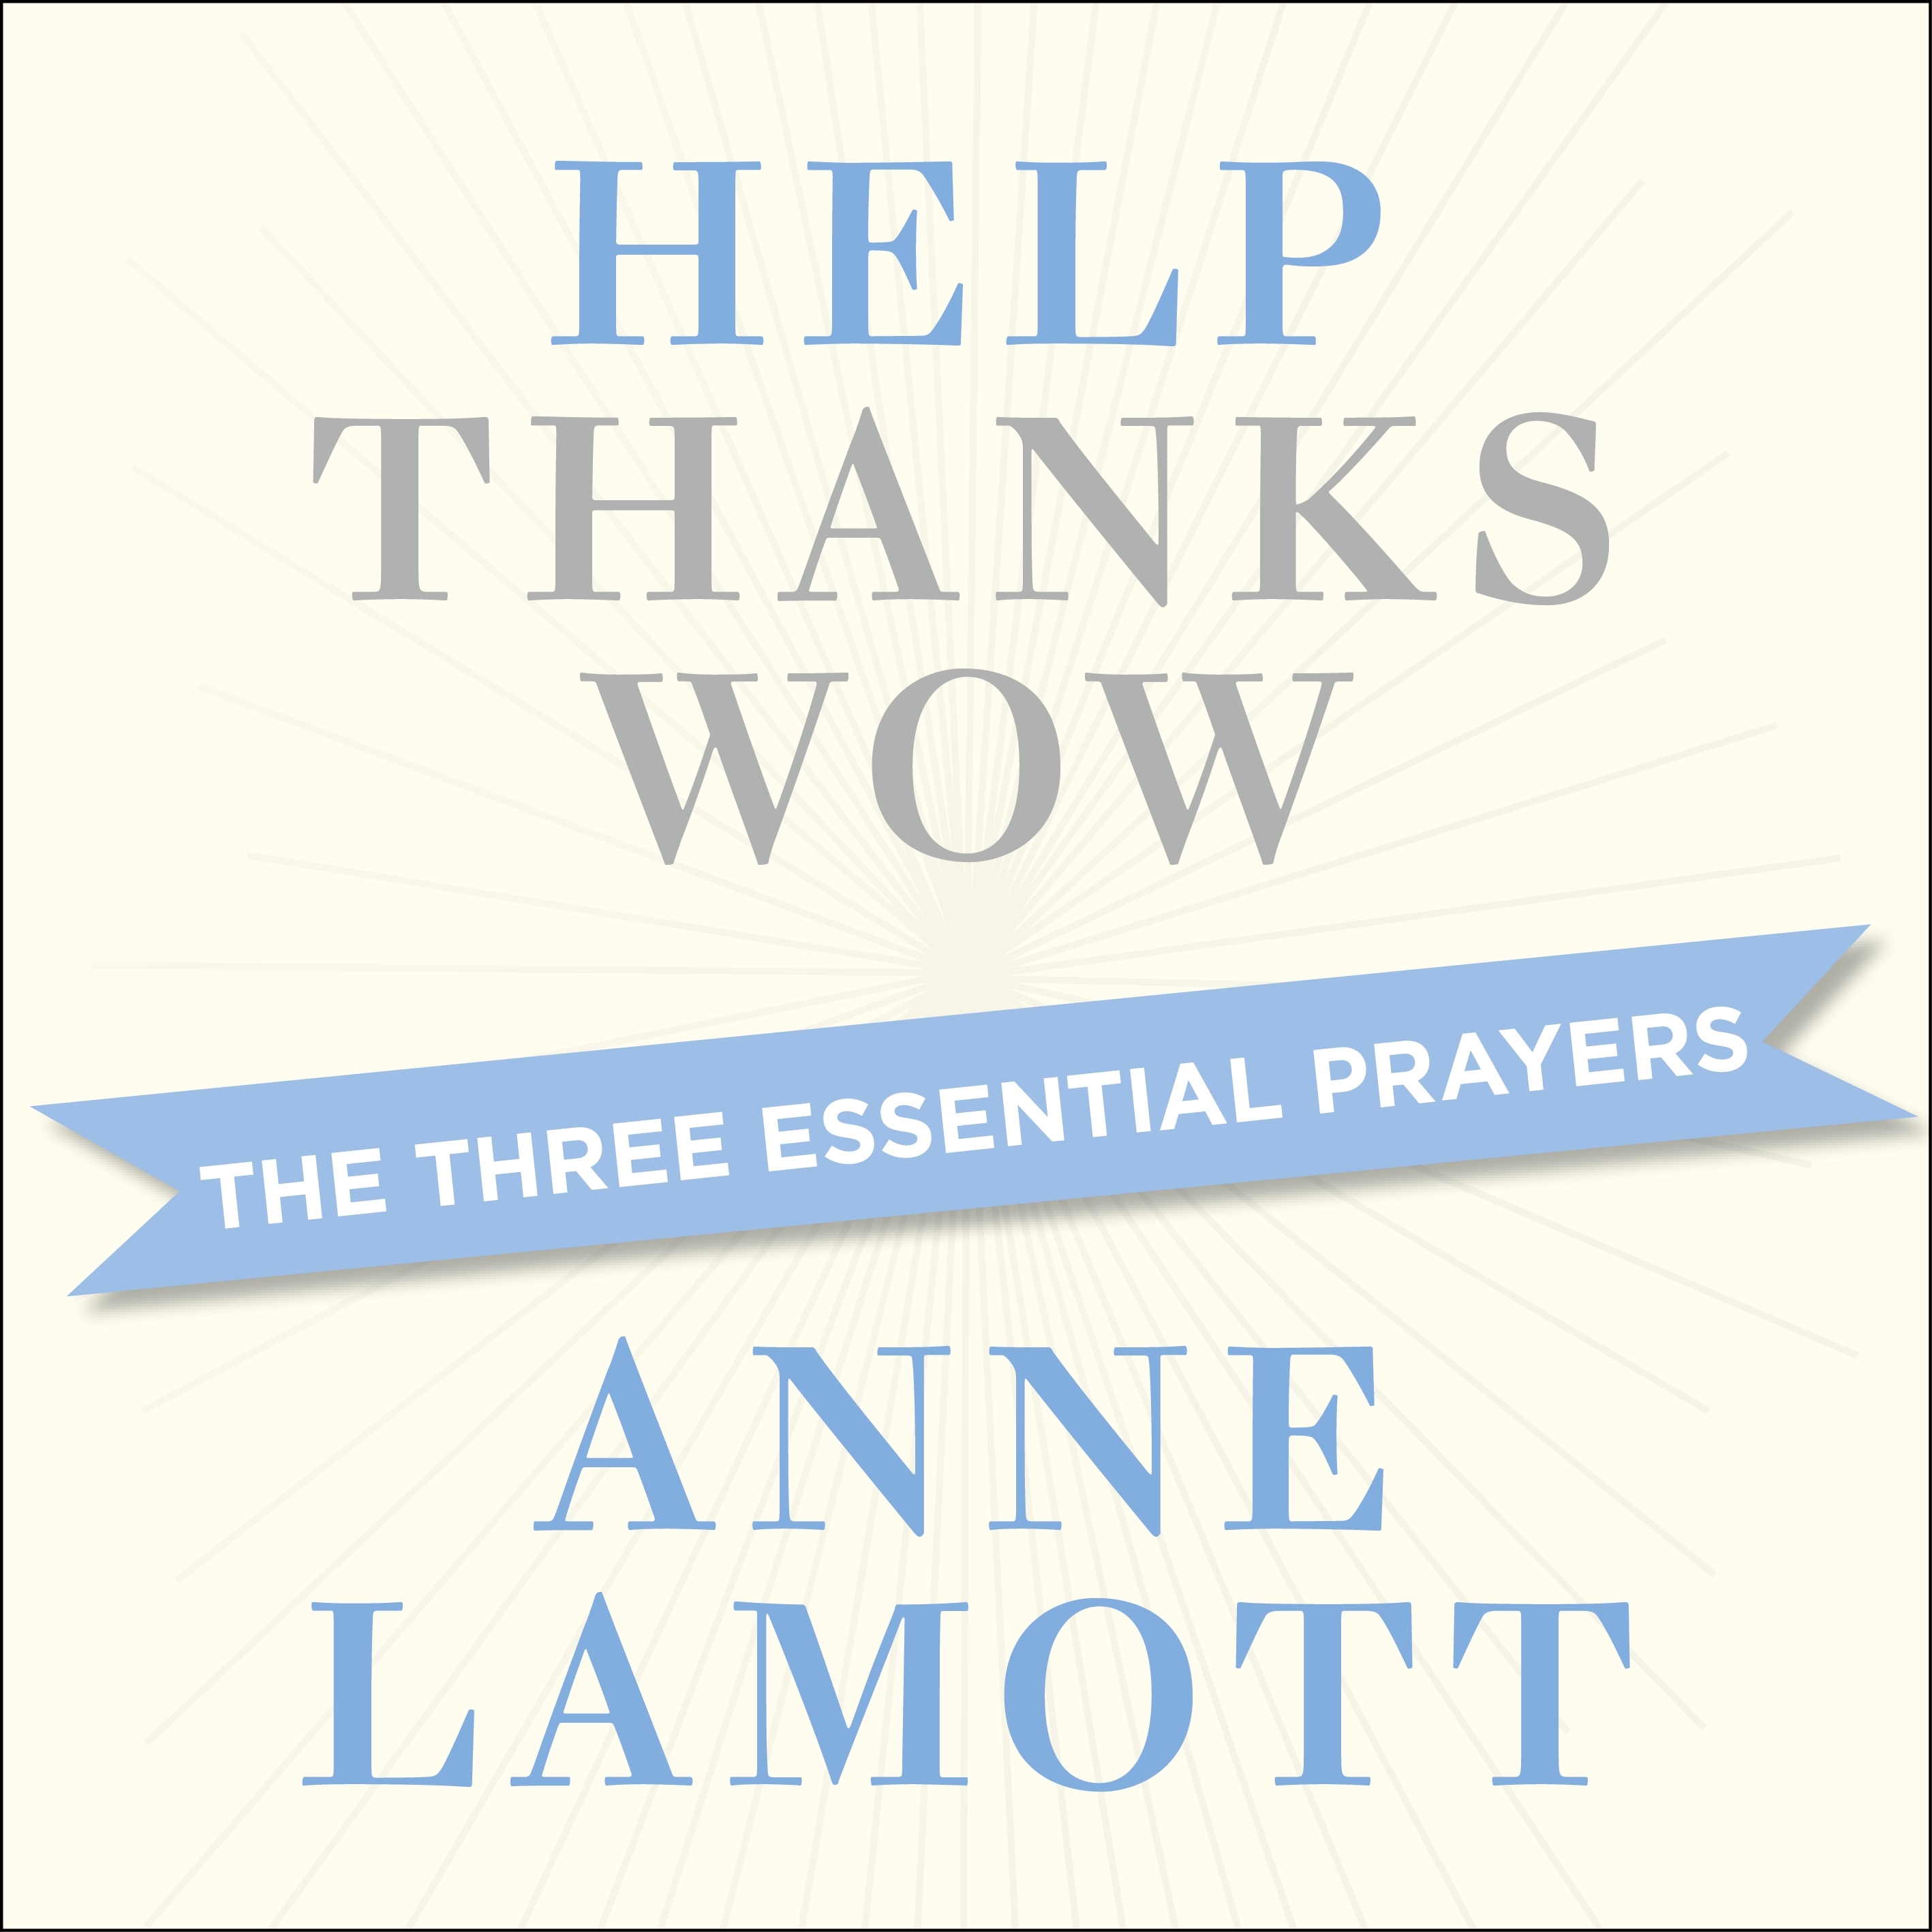 Help Thanks Wow by Anne Lamott